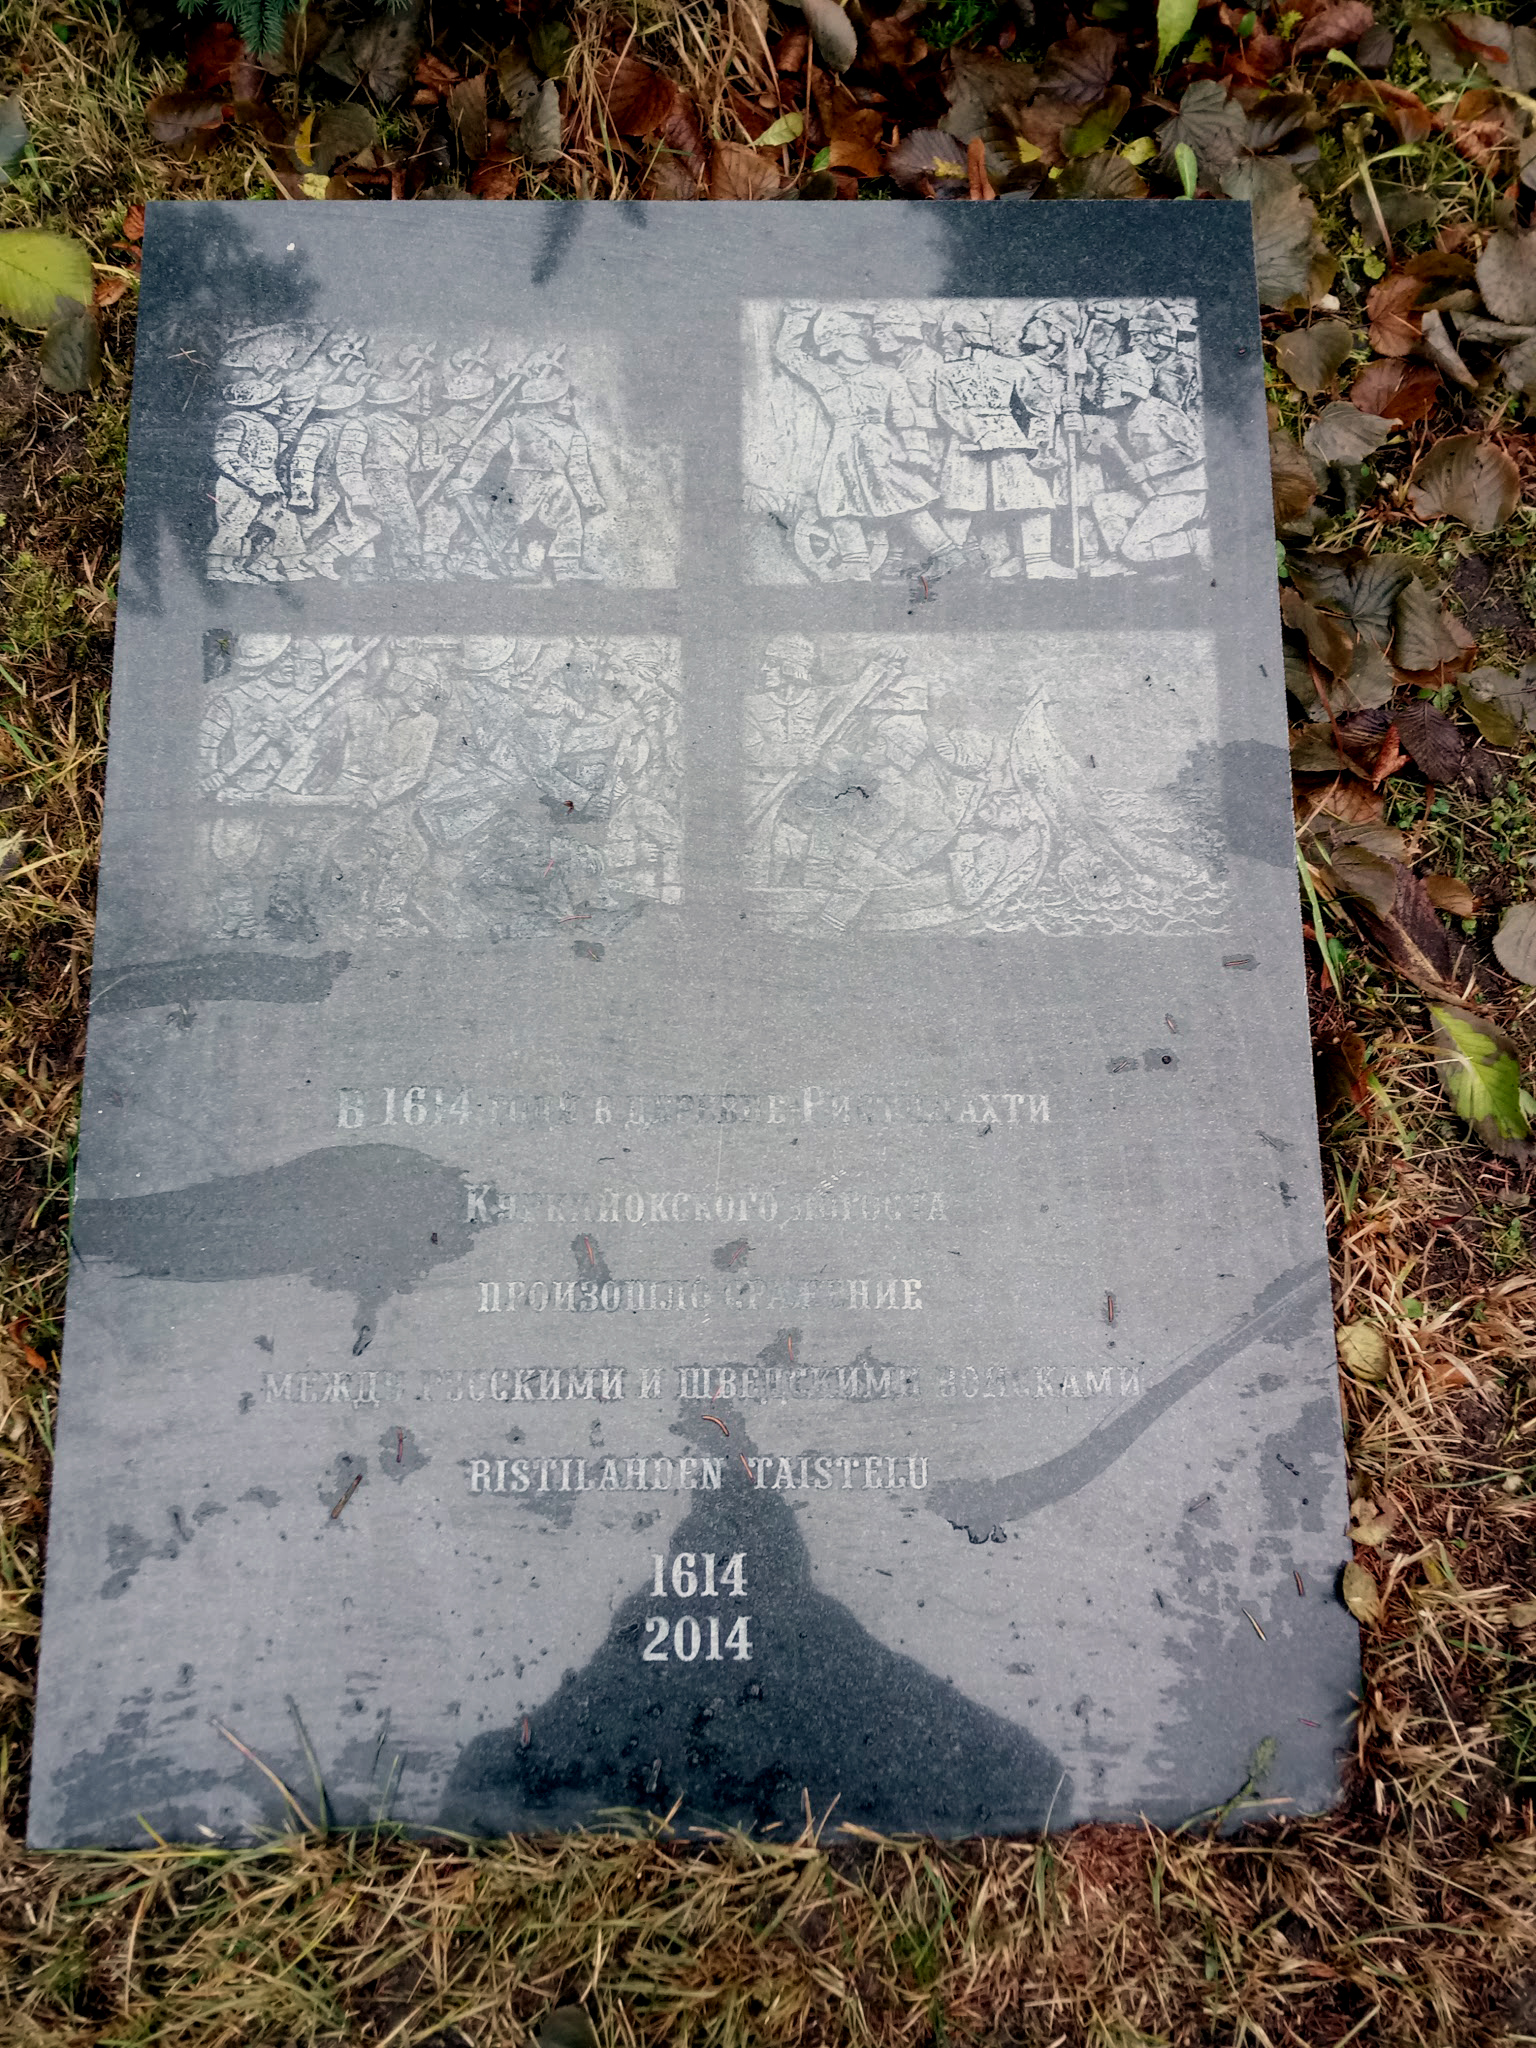 November 11, 2017. The memorial plaque to the Battle of Ristlahti